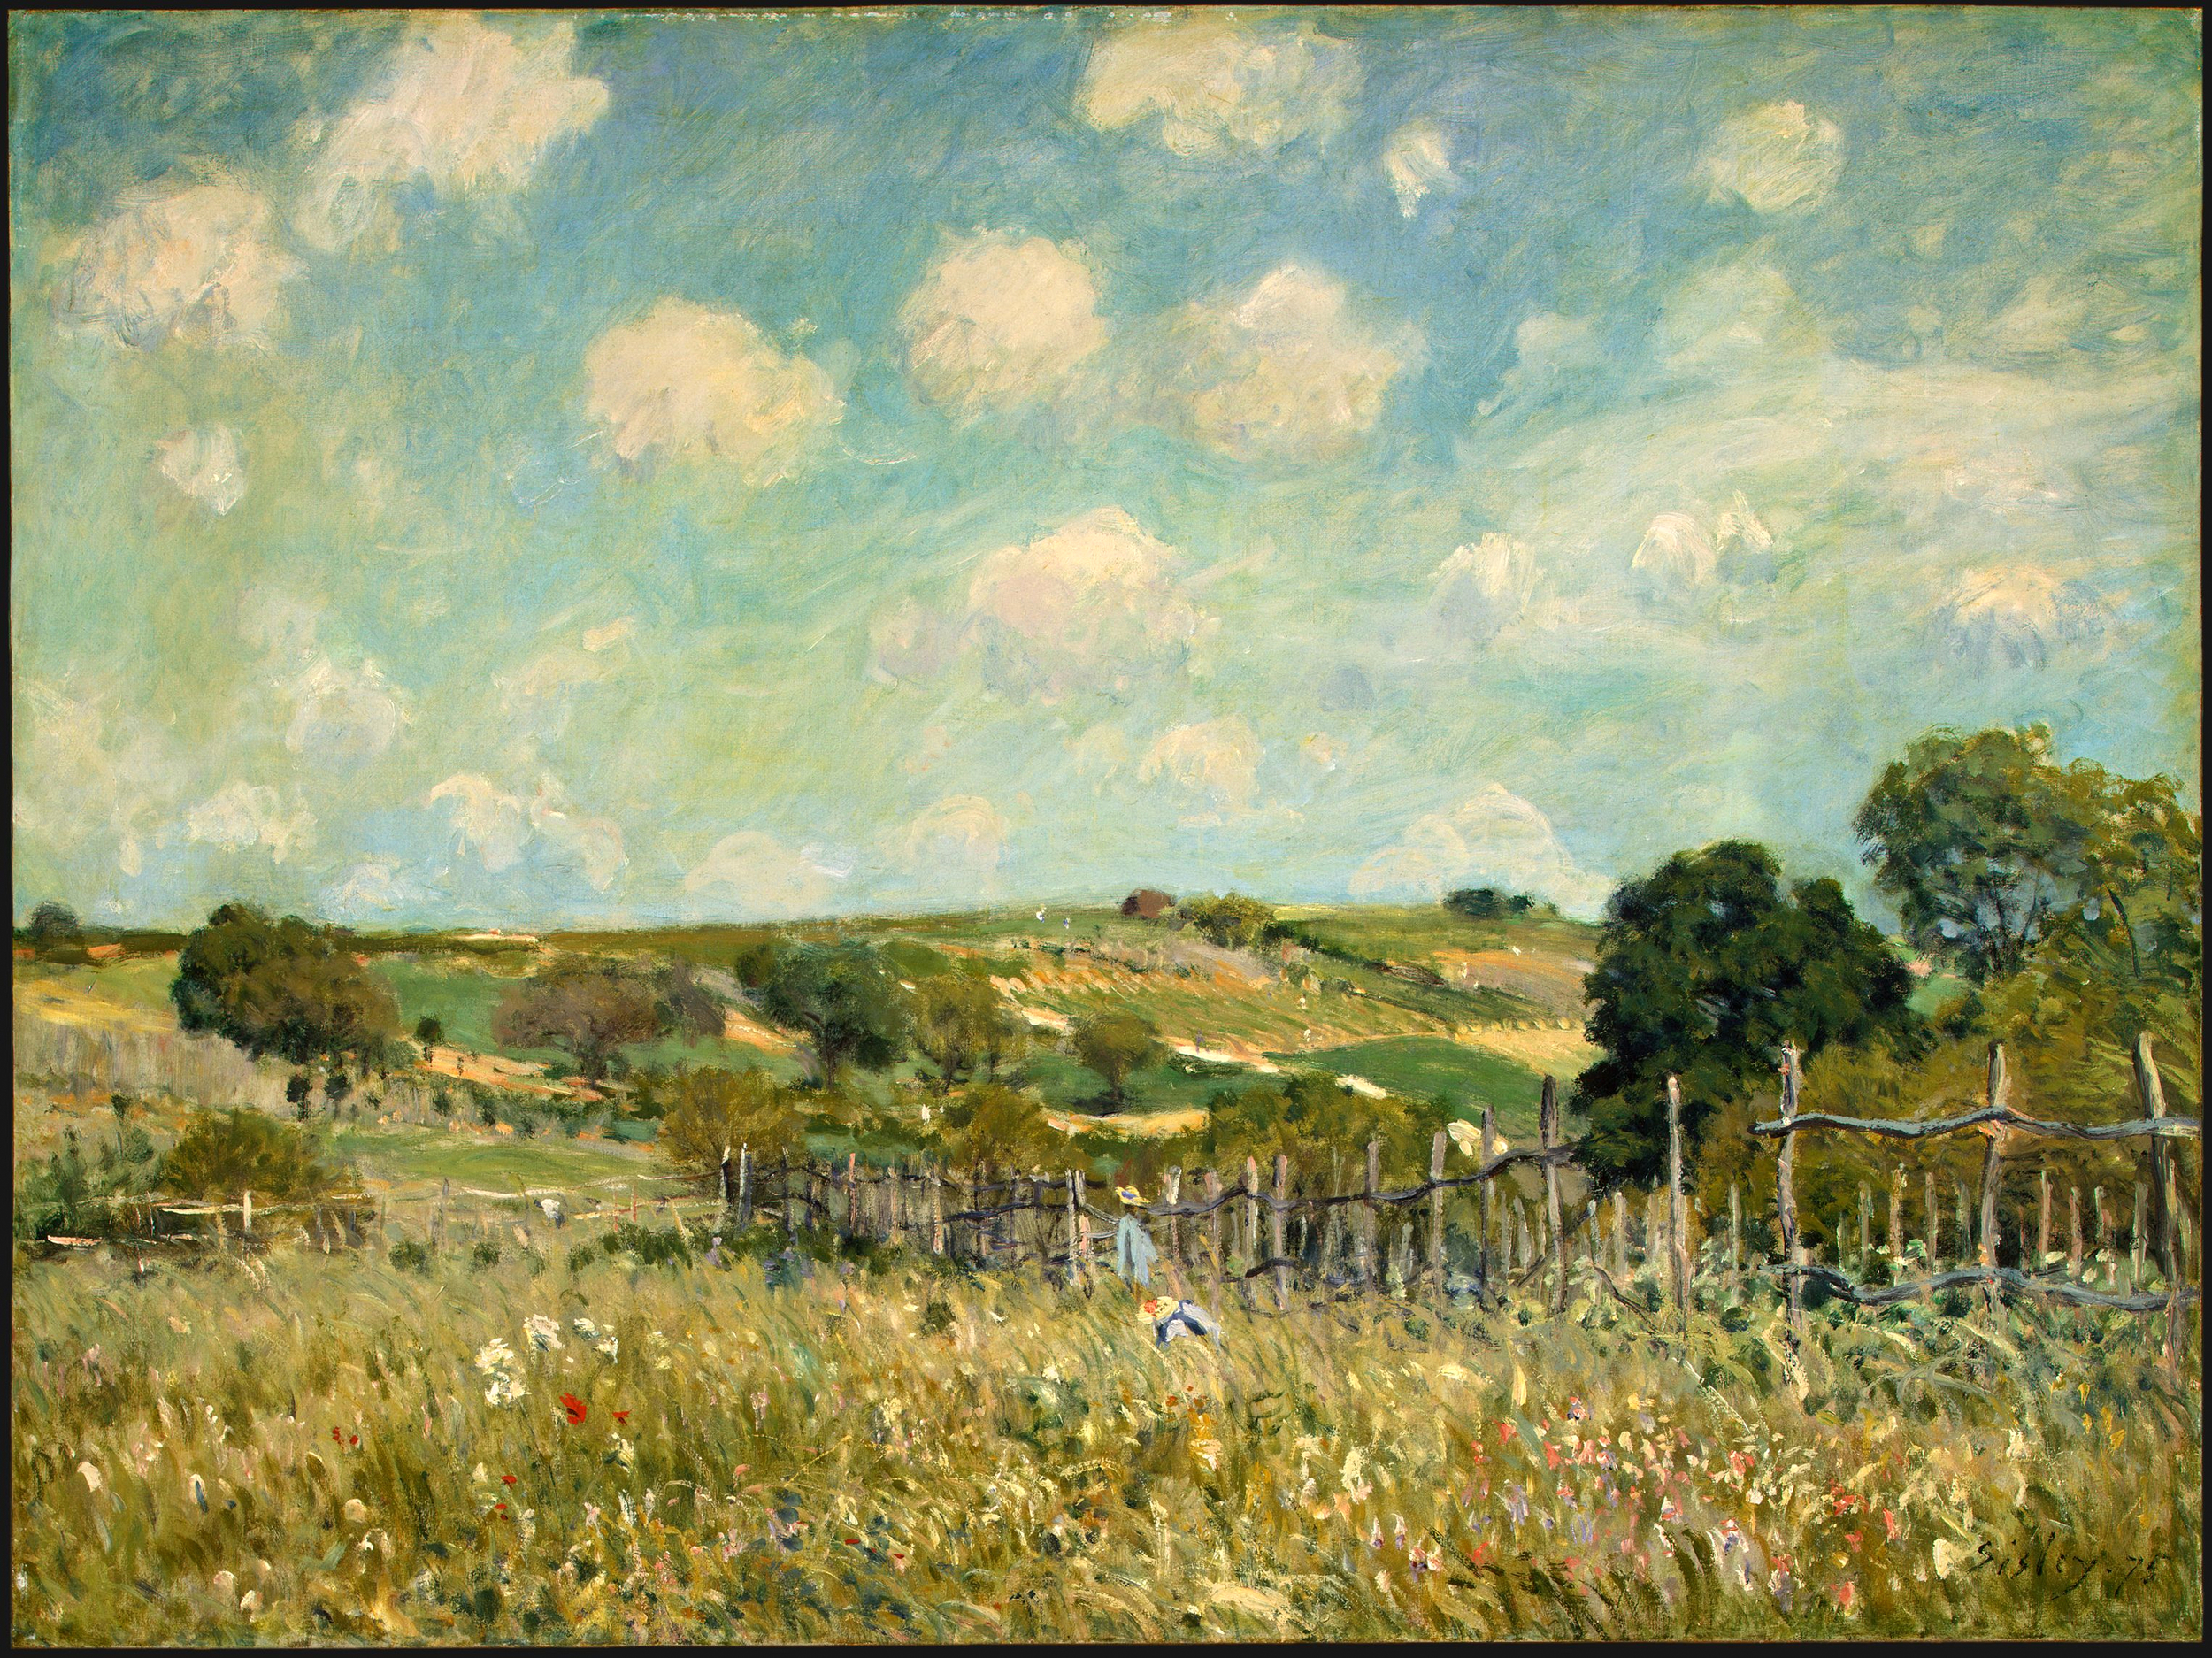 Meadow by Alfred Sisley [Public domain], via Wikimedia Commons